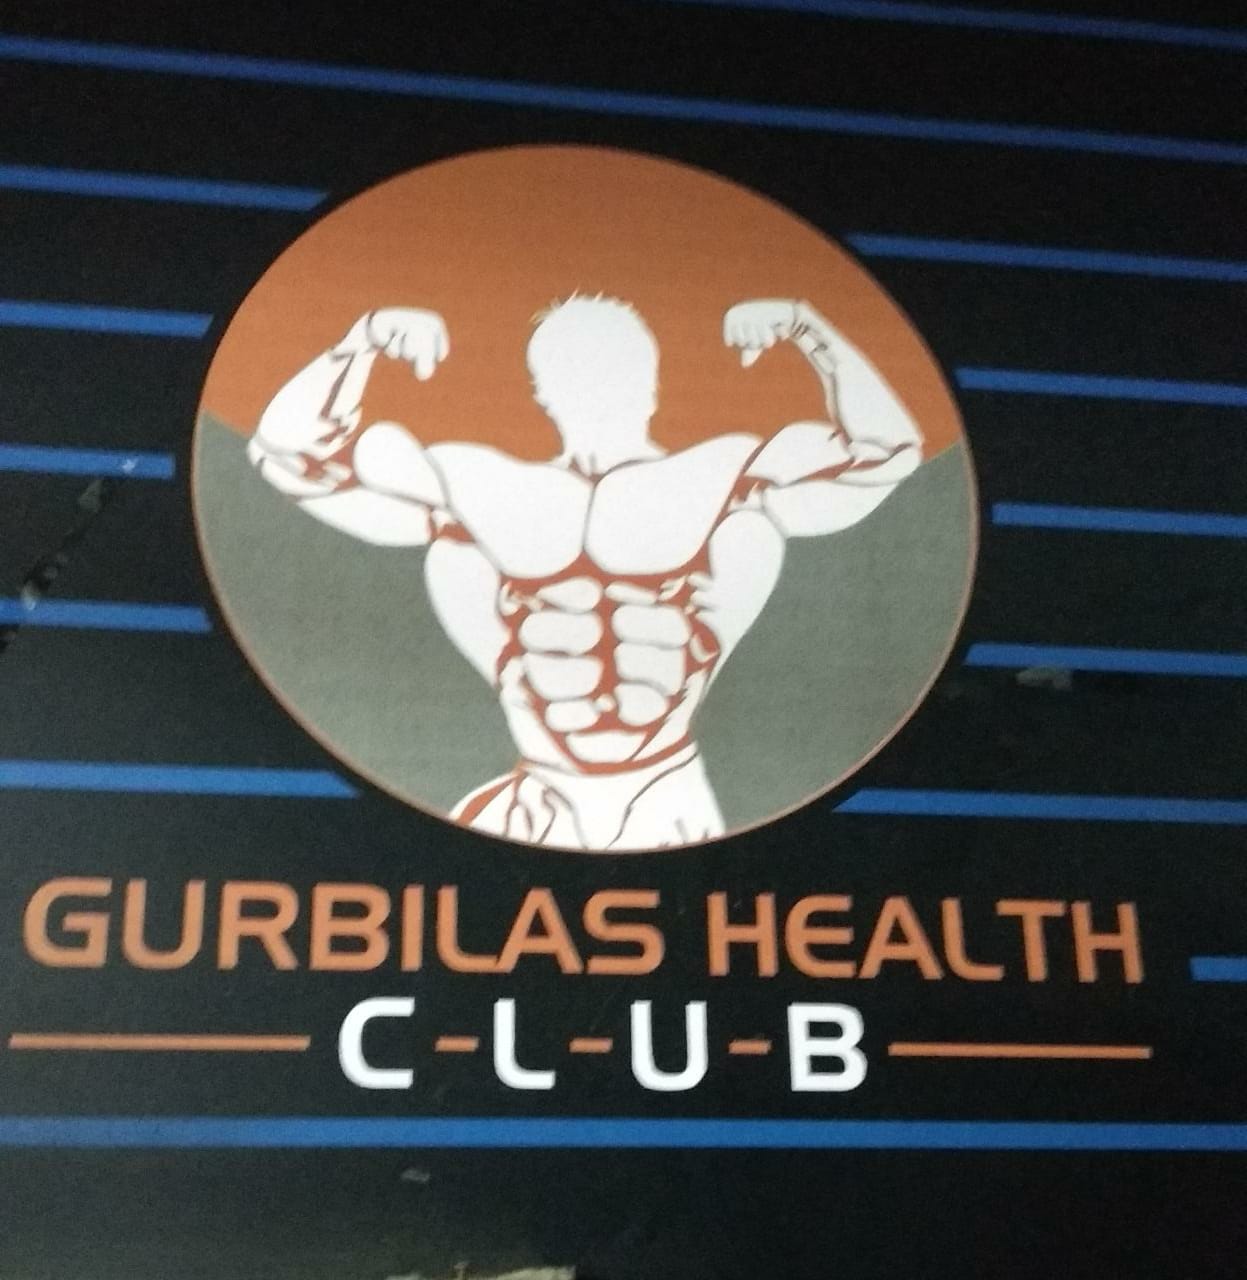 mohali-phase-1-Gurbilas-Health-Club_1686_MTY4Ng